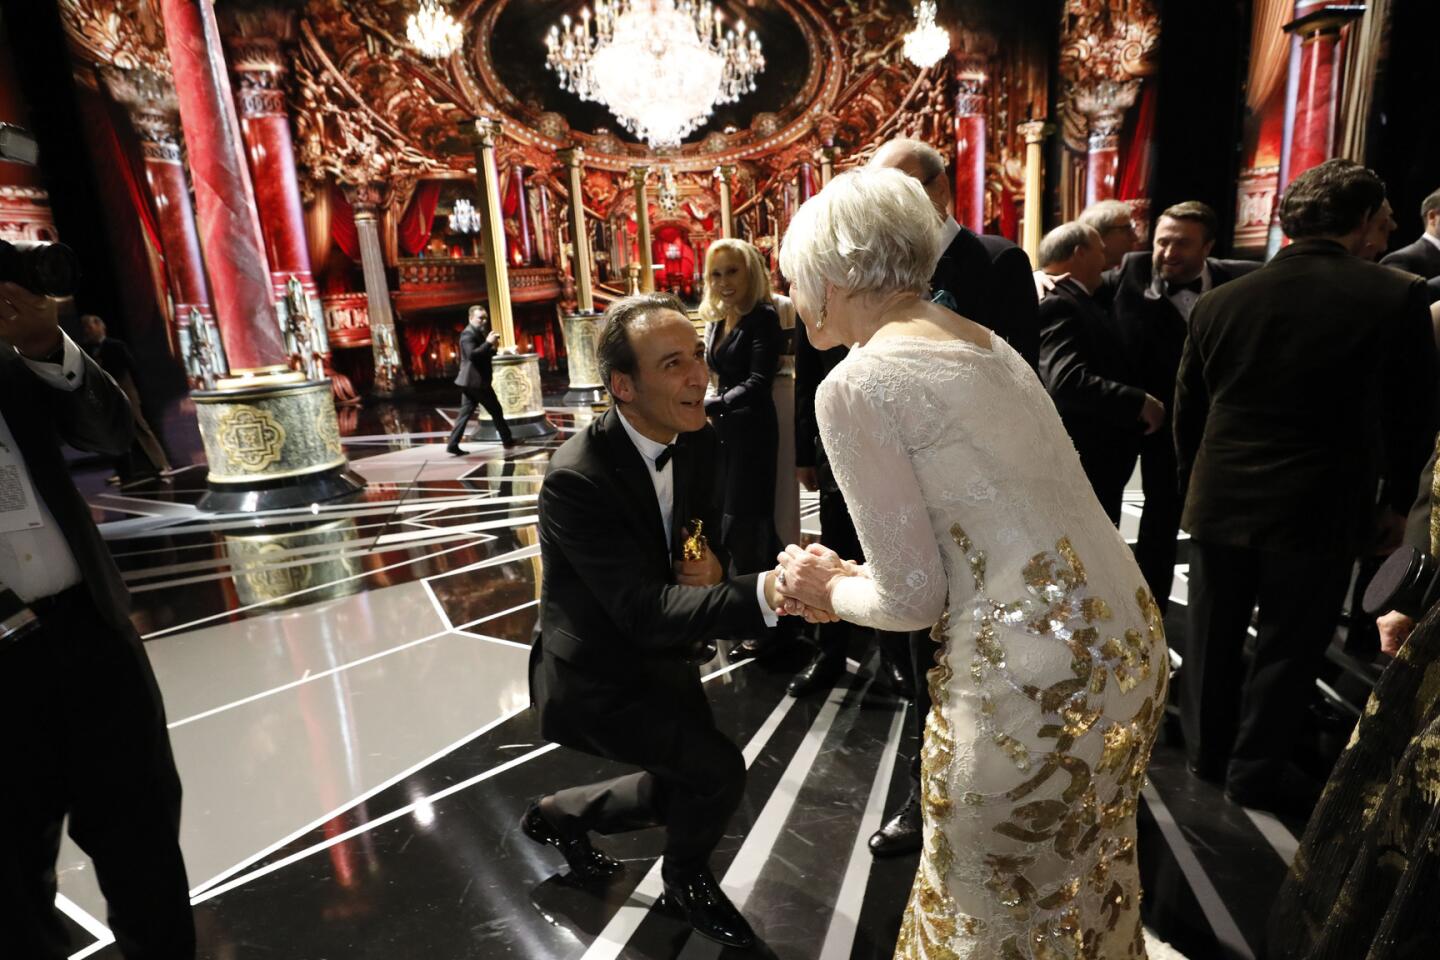 Oscar winners Helen Mirren and Alexandre Desplat backstage at the 90th Academy Awards.